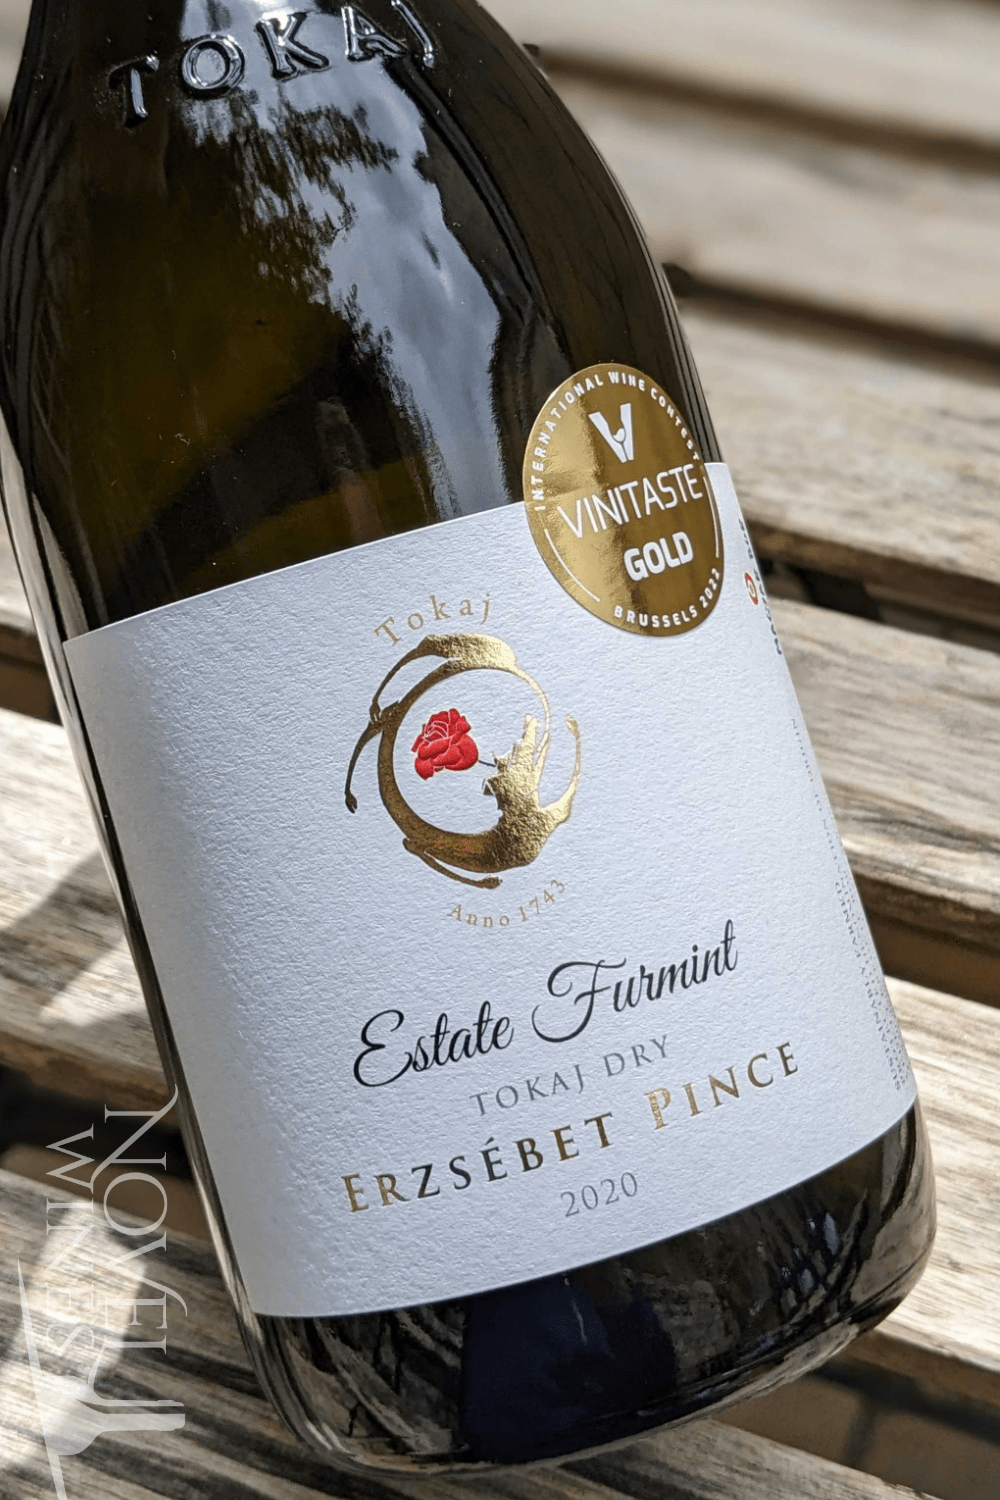 Erzsebet Pince White Wine Erzsebet Pince Estate Furmint 2020, Hungary